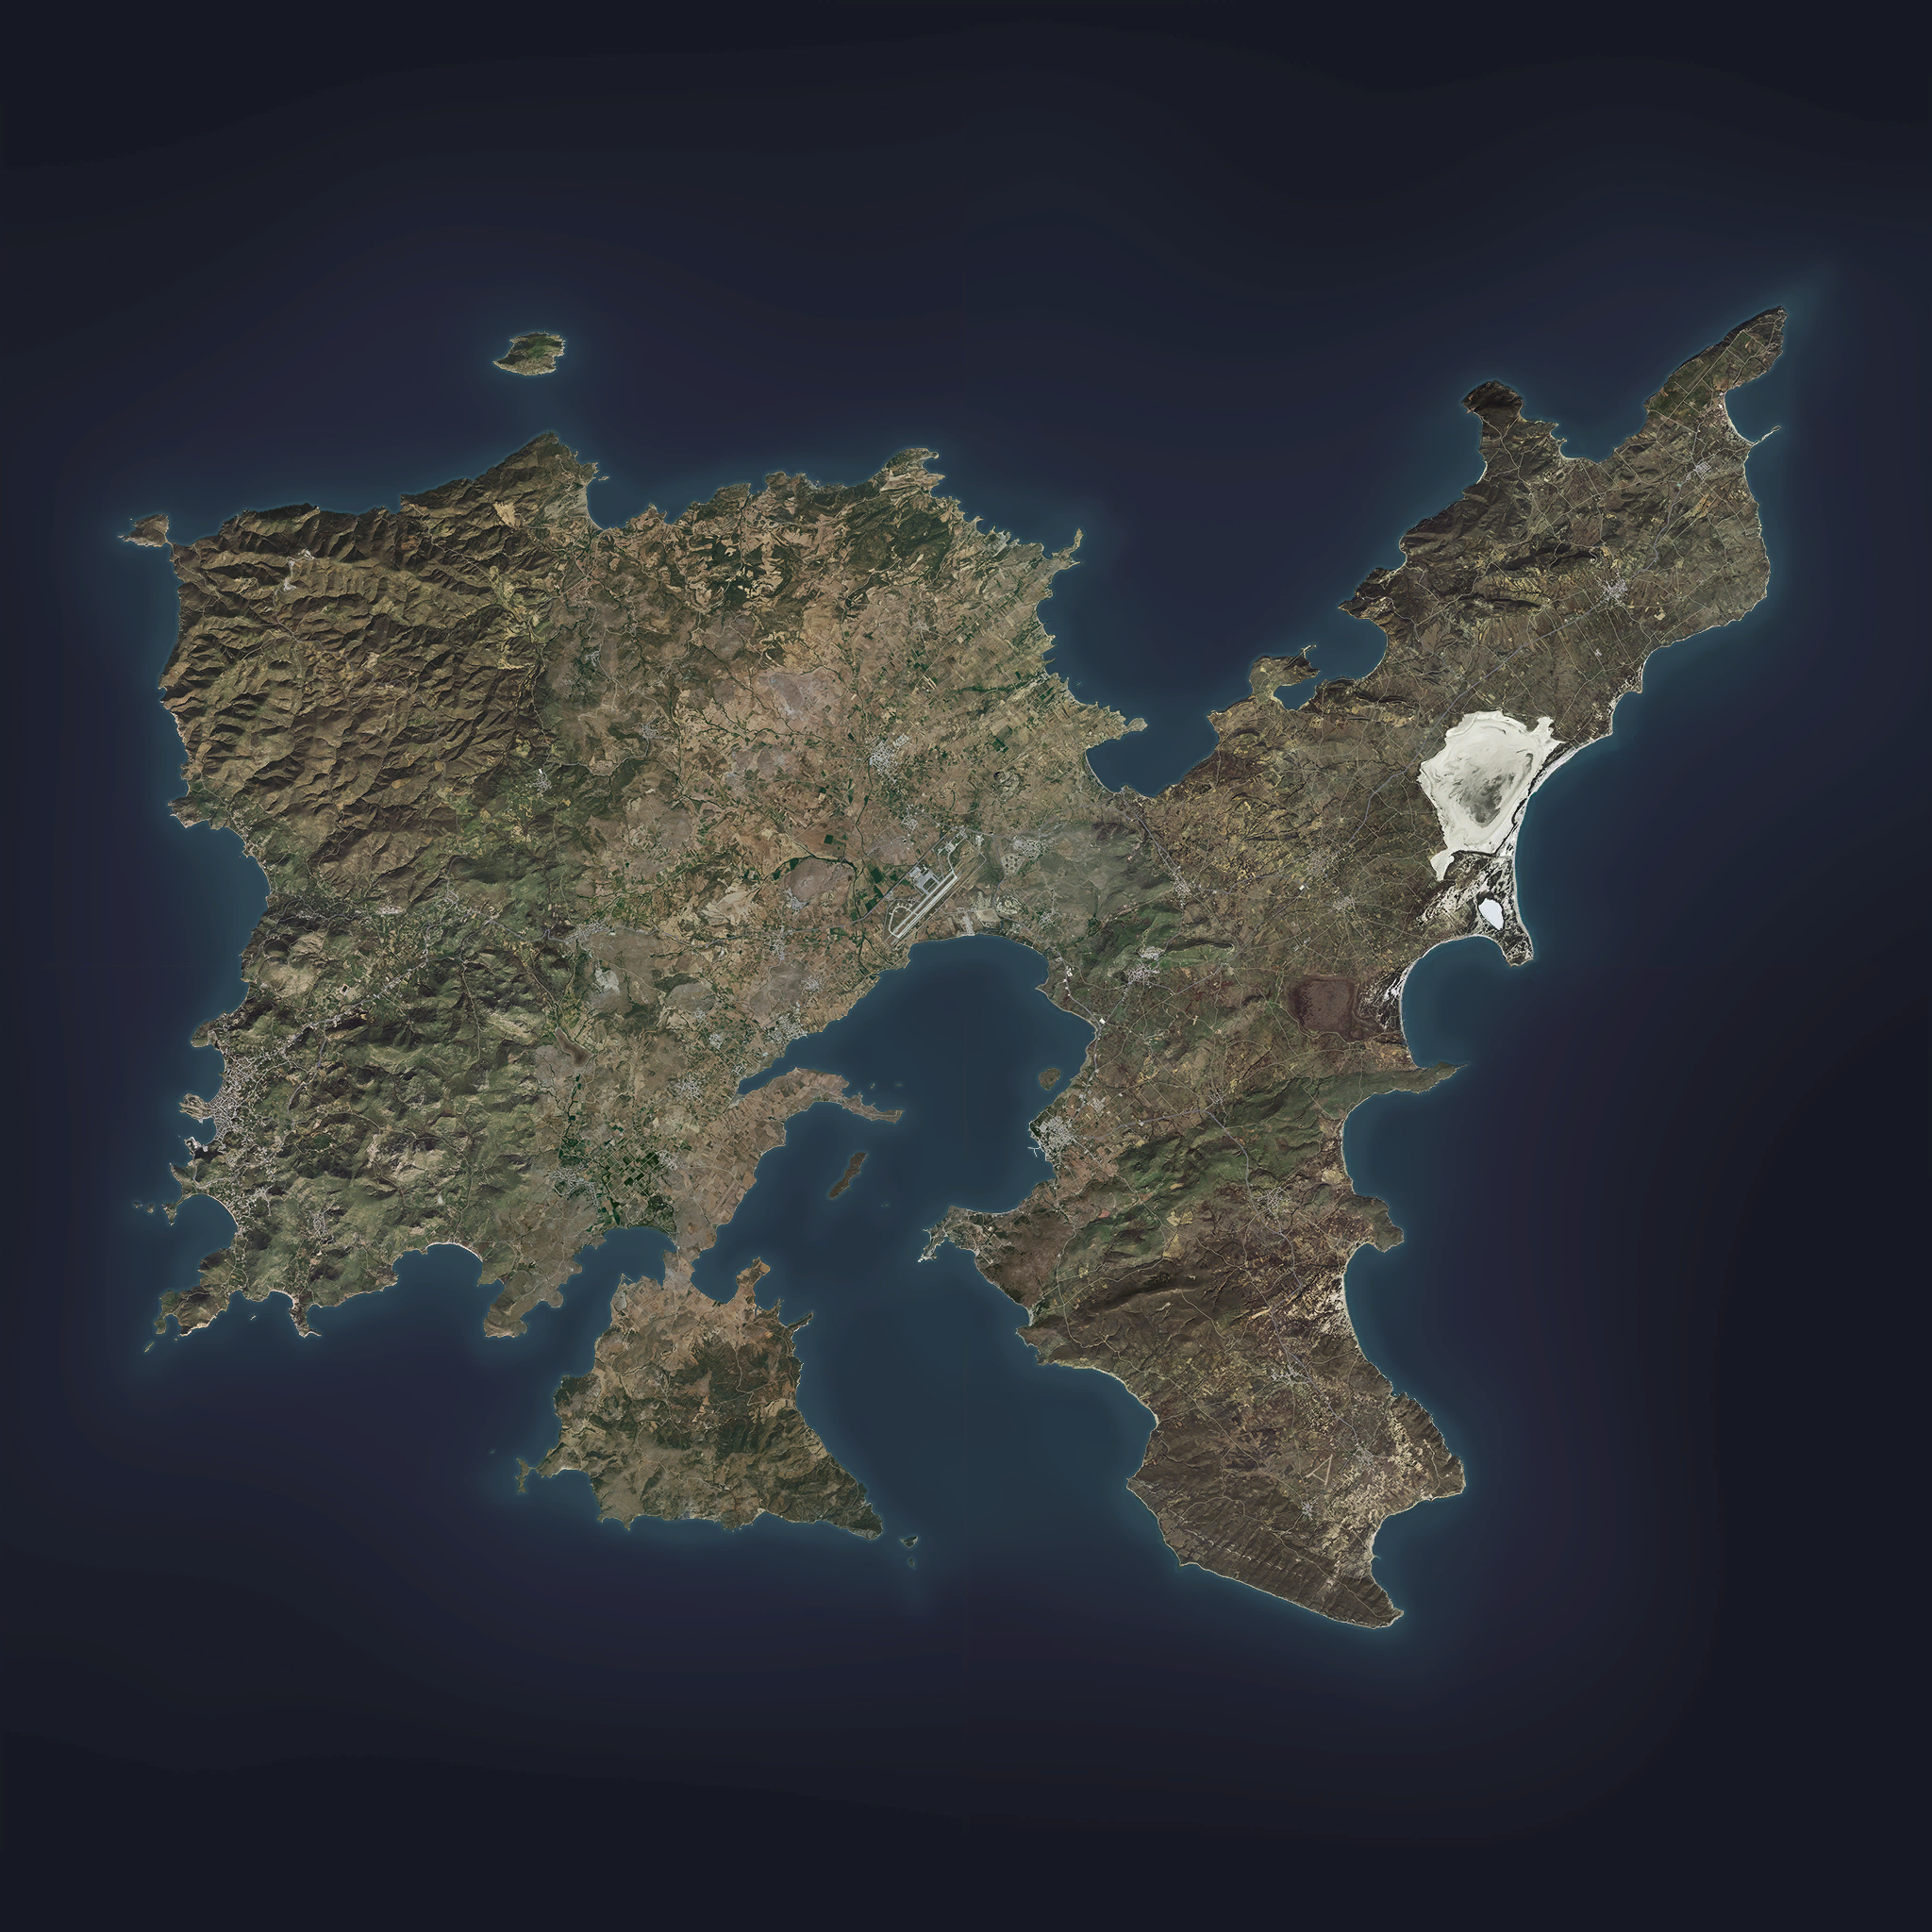 arma 3 city map